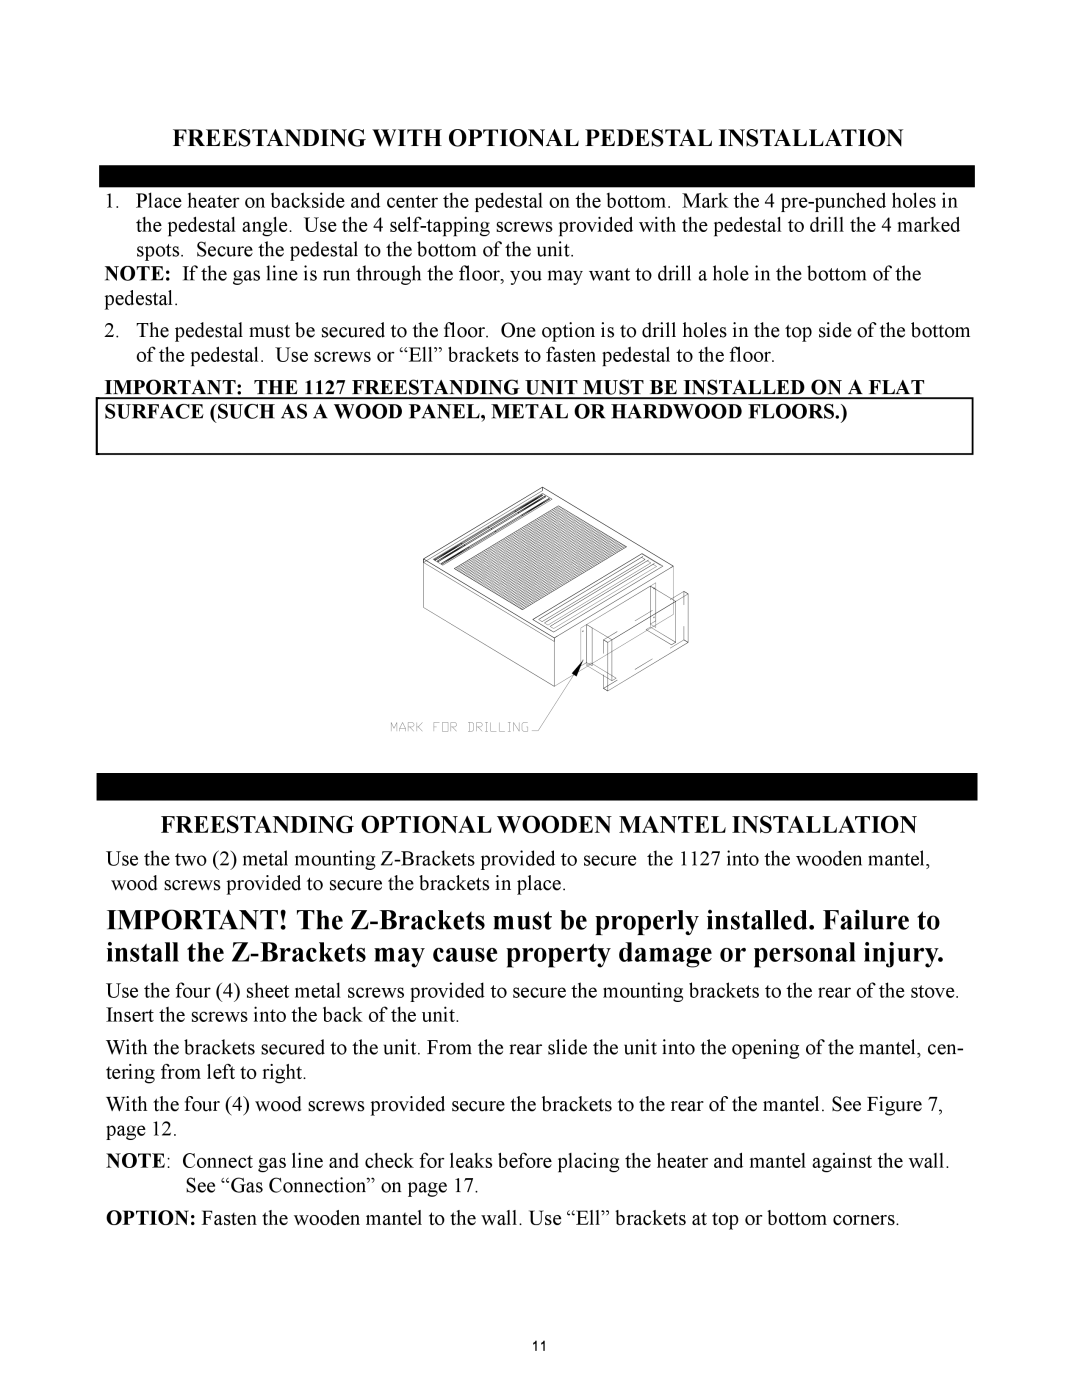 New Buck Corporation 1127B manual Freestanding With Optional Pedestal Installation 